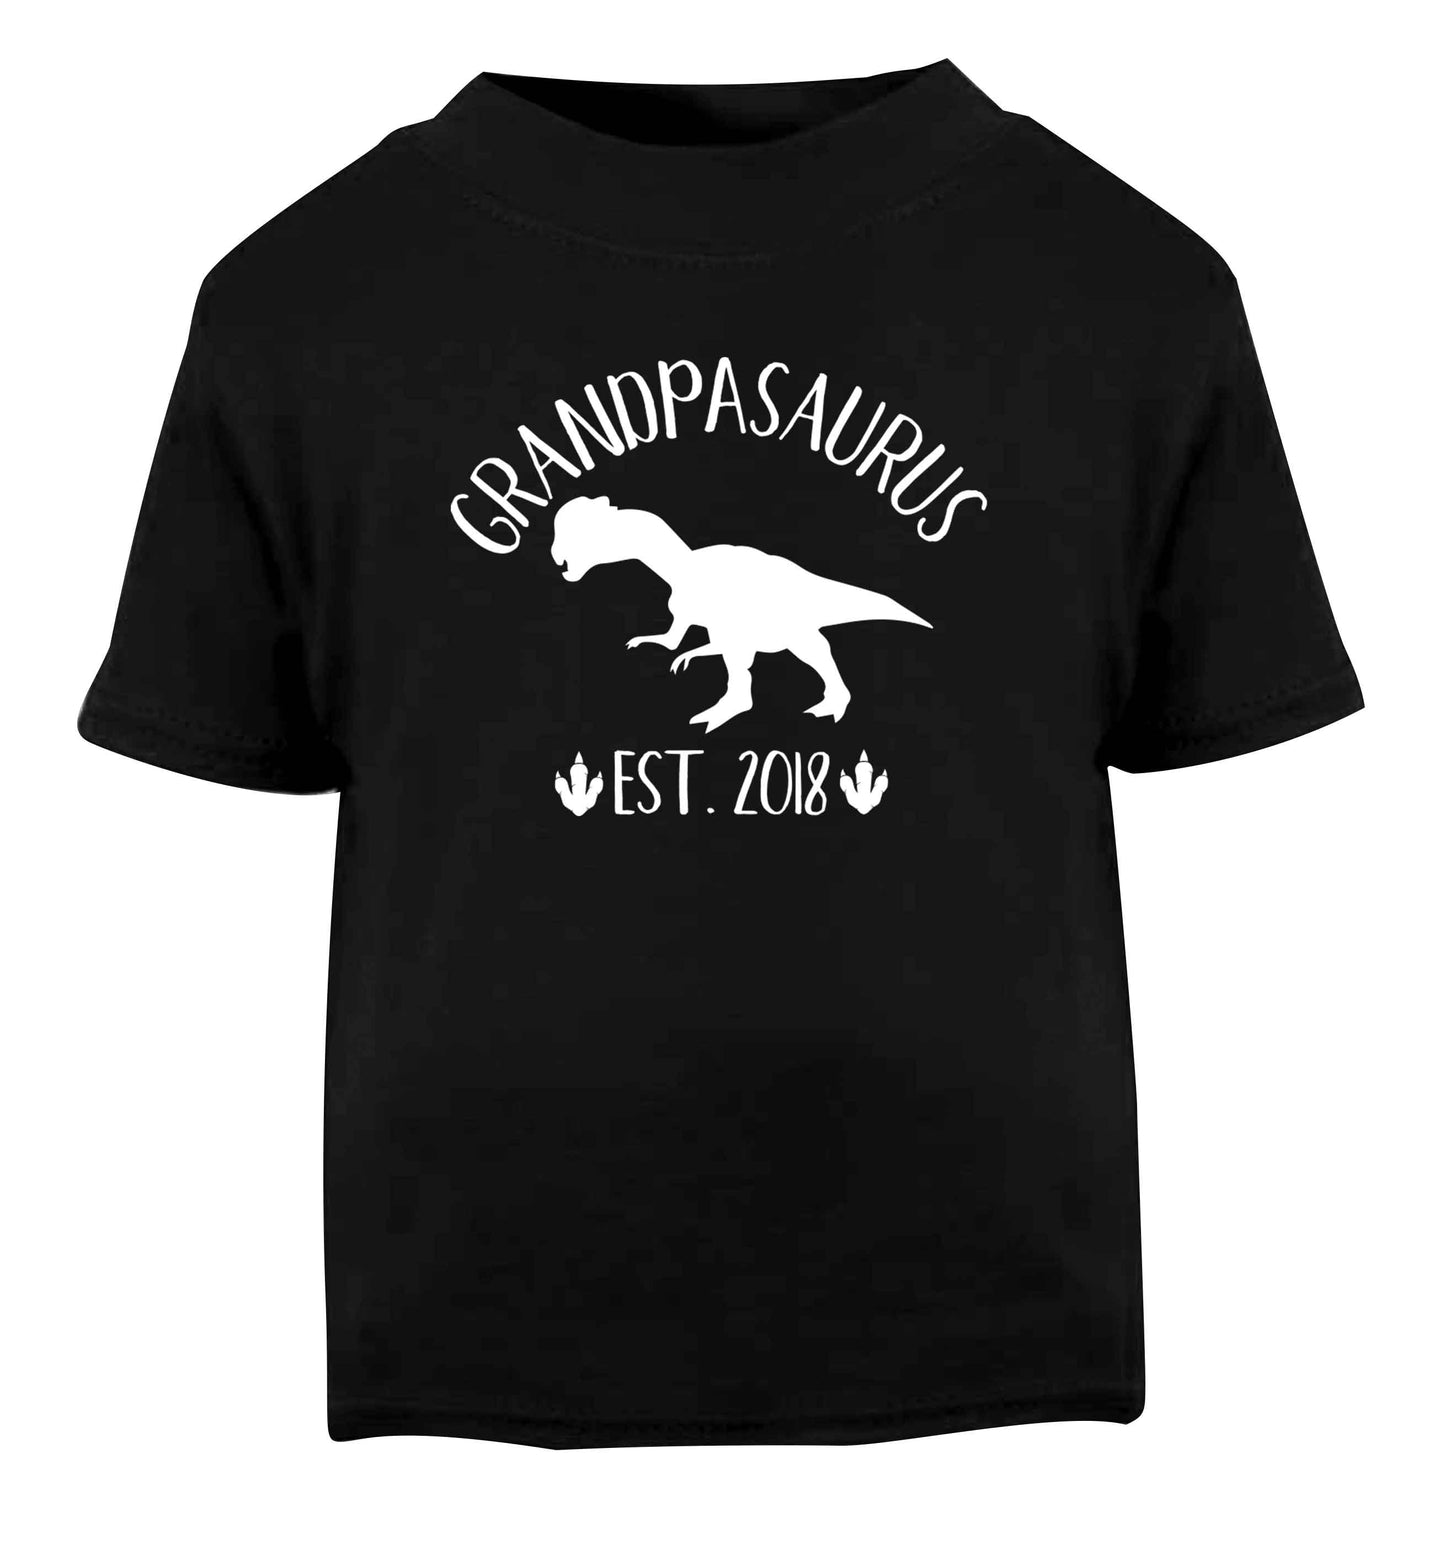 Personalised grandpasaurus since (custom date) Black Baby Toddler Tshirt 2 years